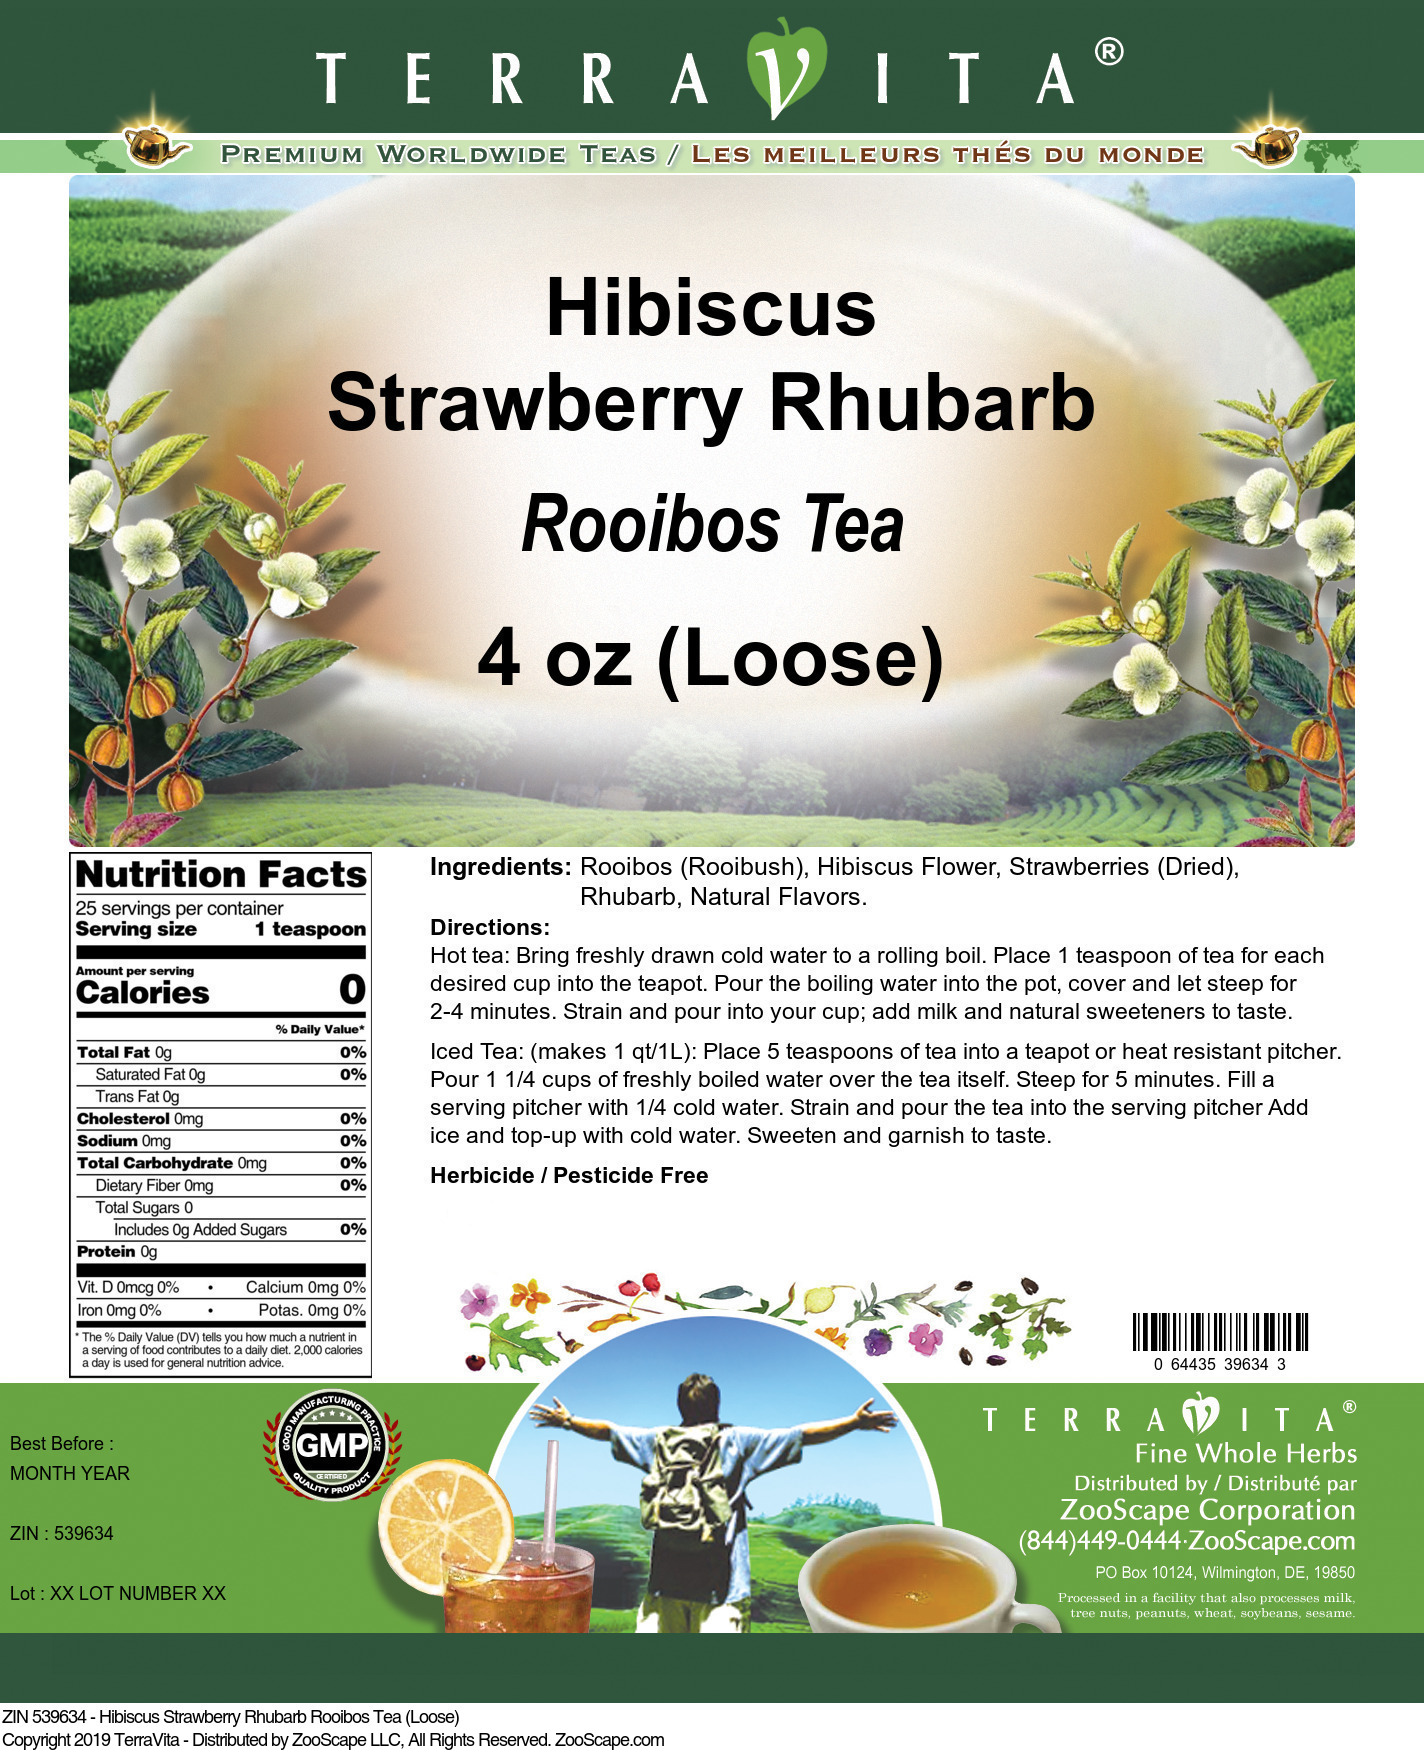 Hibiscus Strawberry Rhubarb Rooibos Tea (Loose) - Label